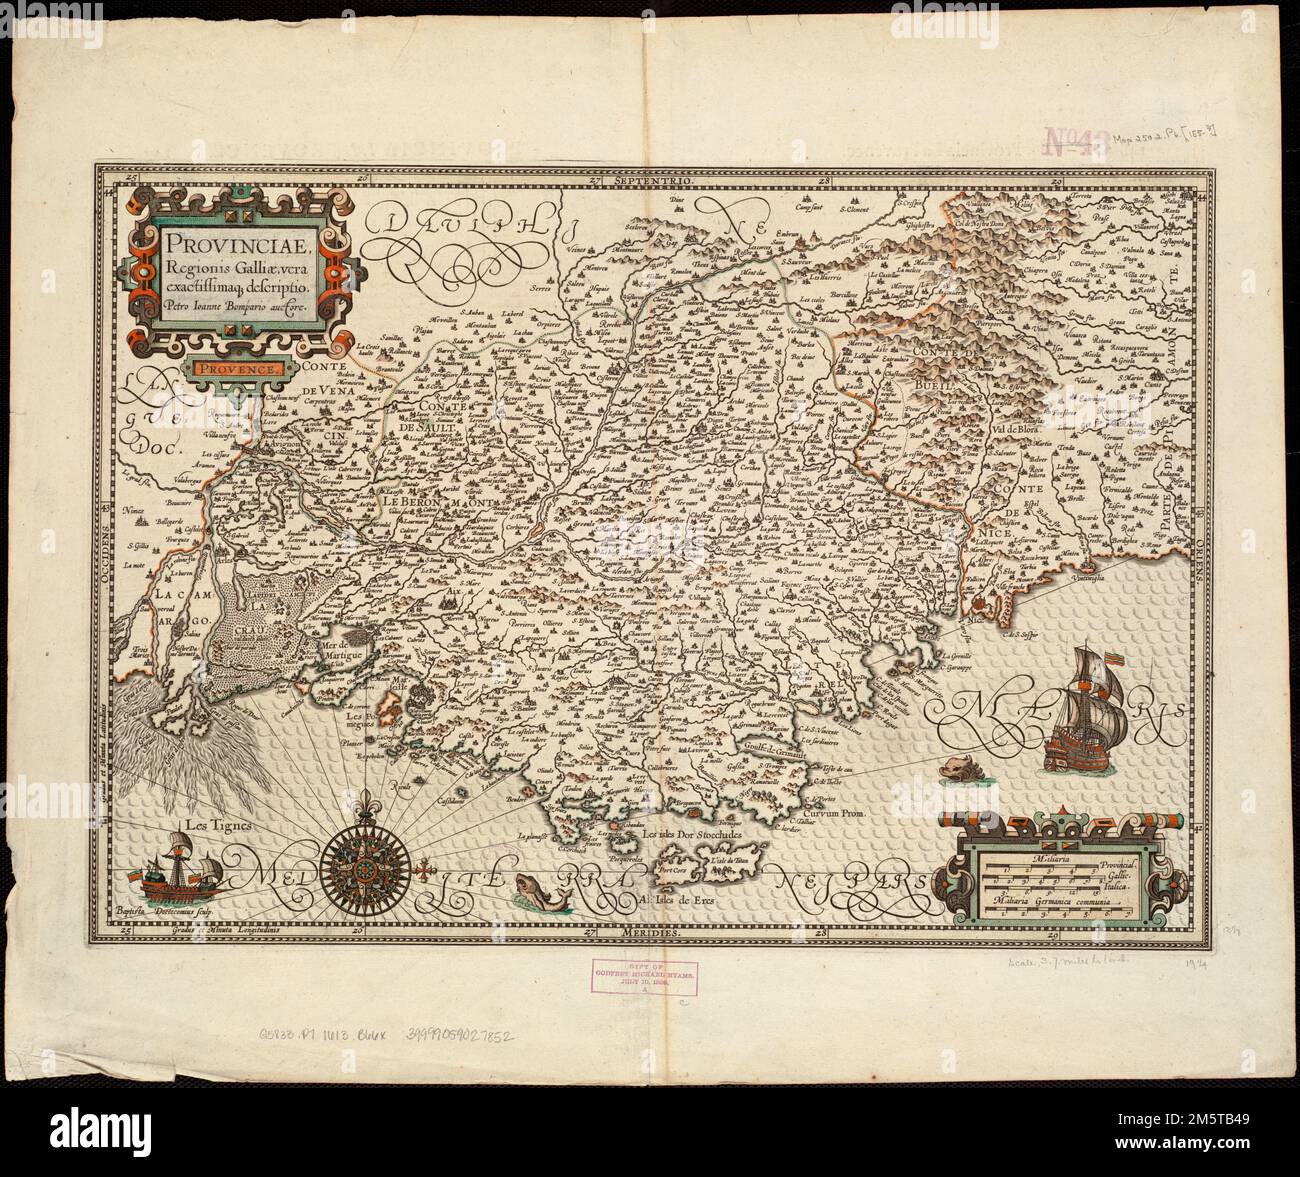 Wonderful world: Mercator's Atlas, 1613